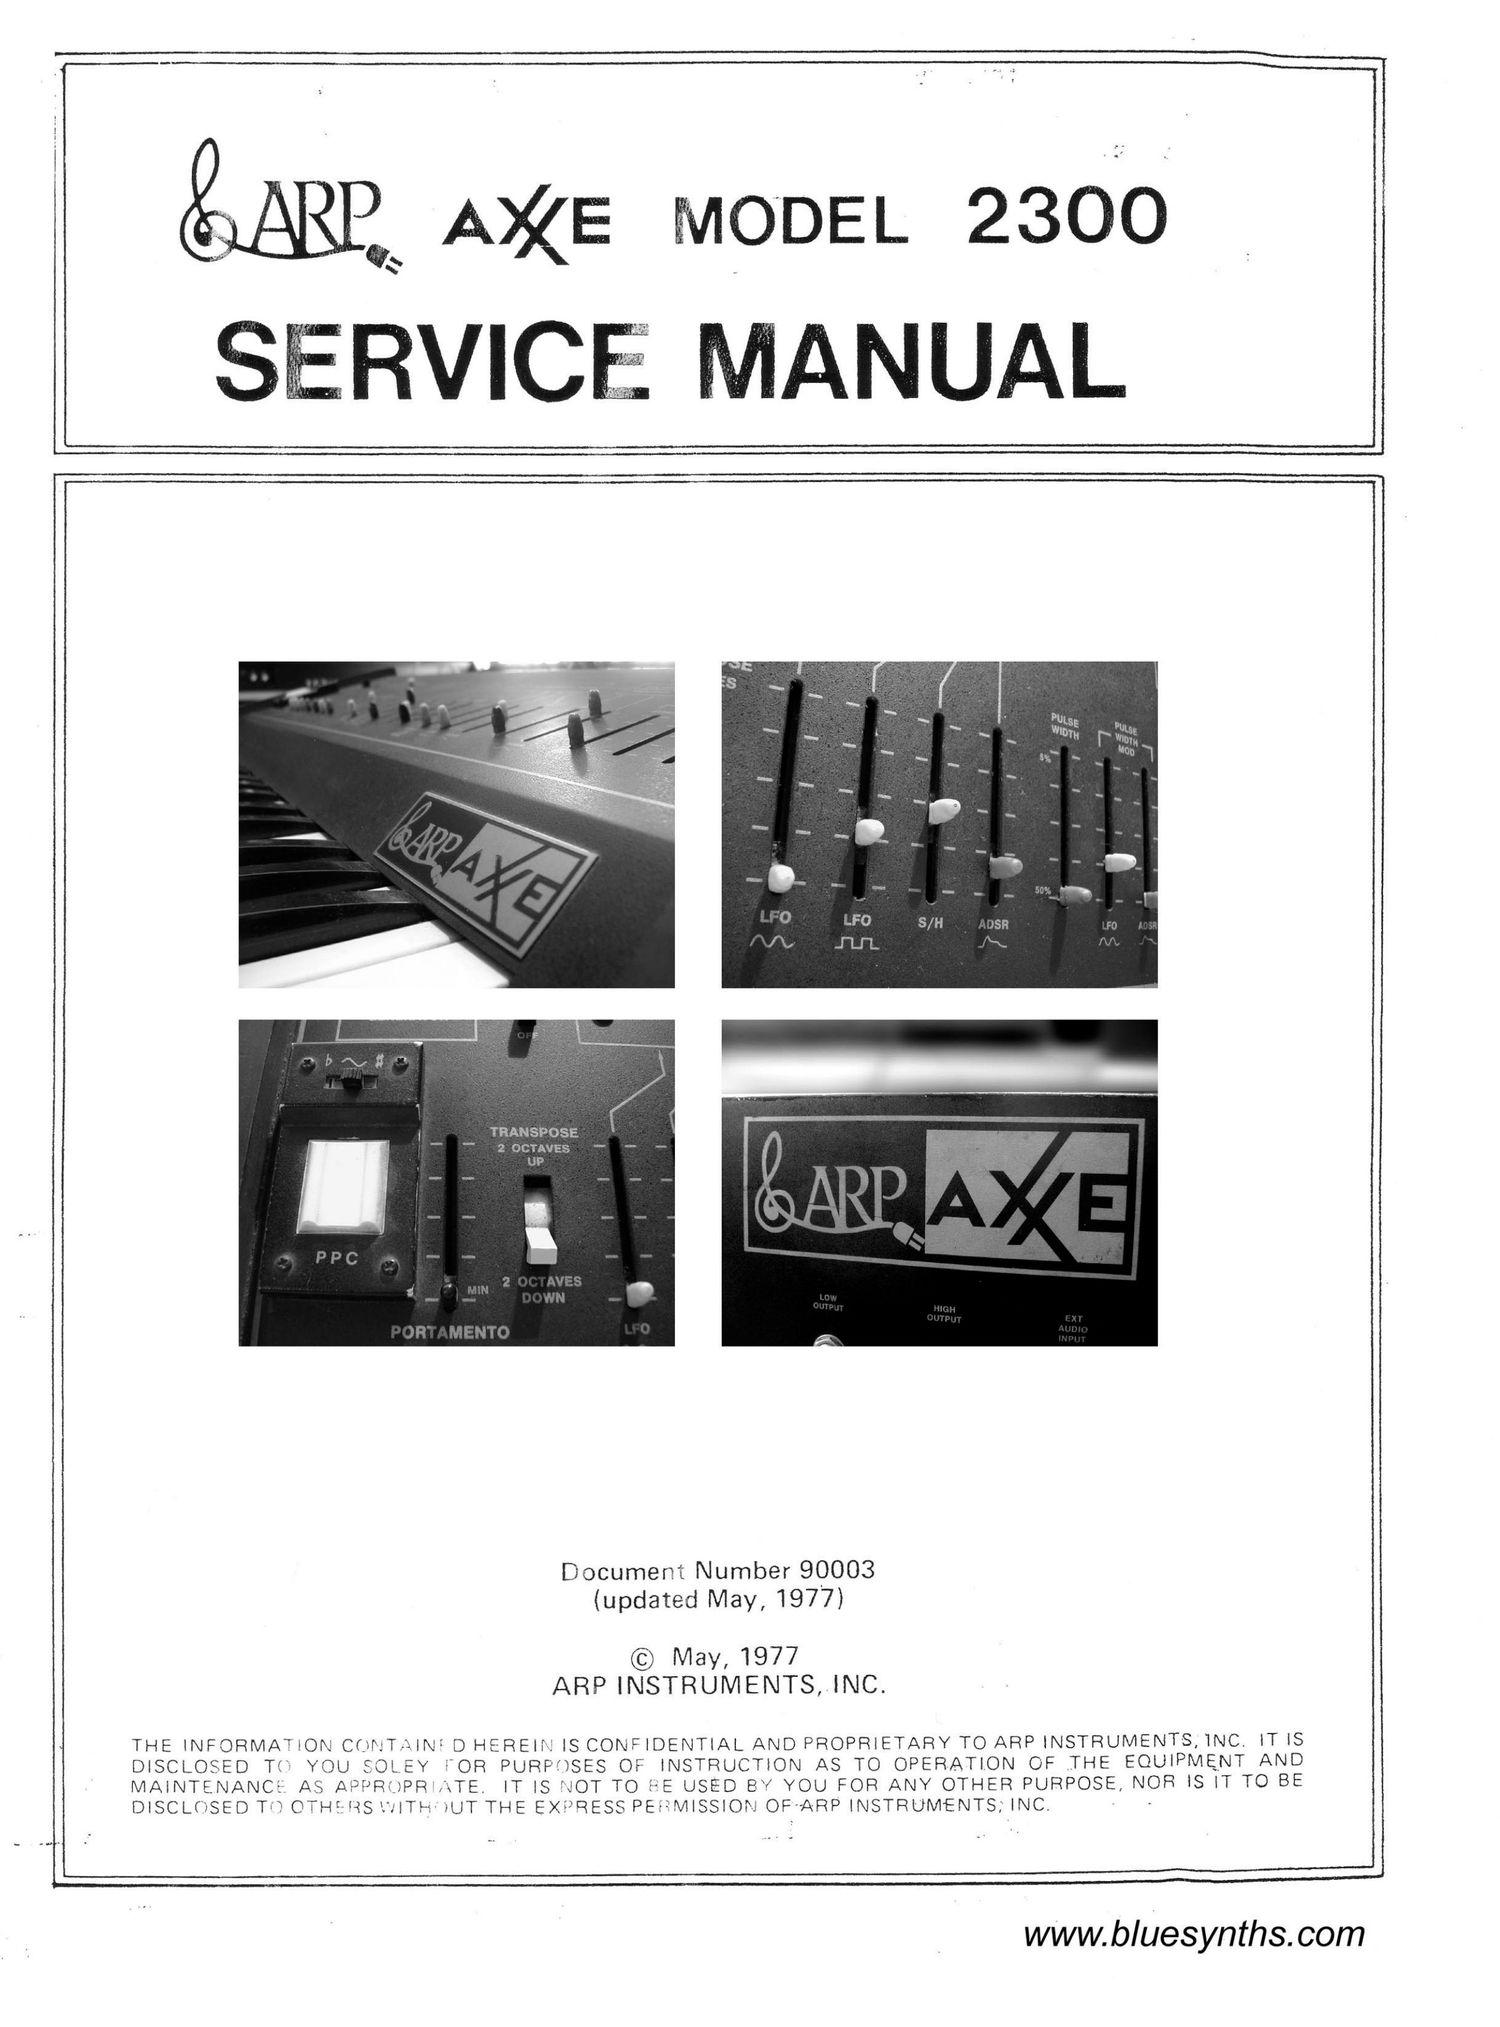 arp axxe service manual